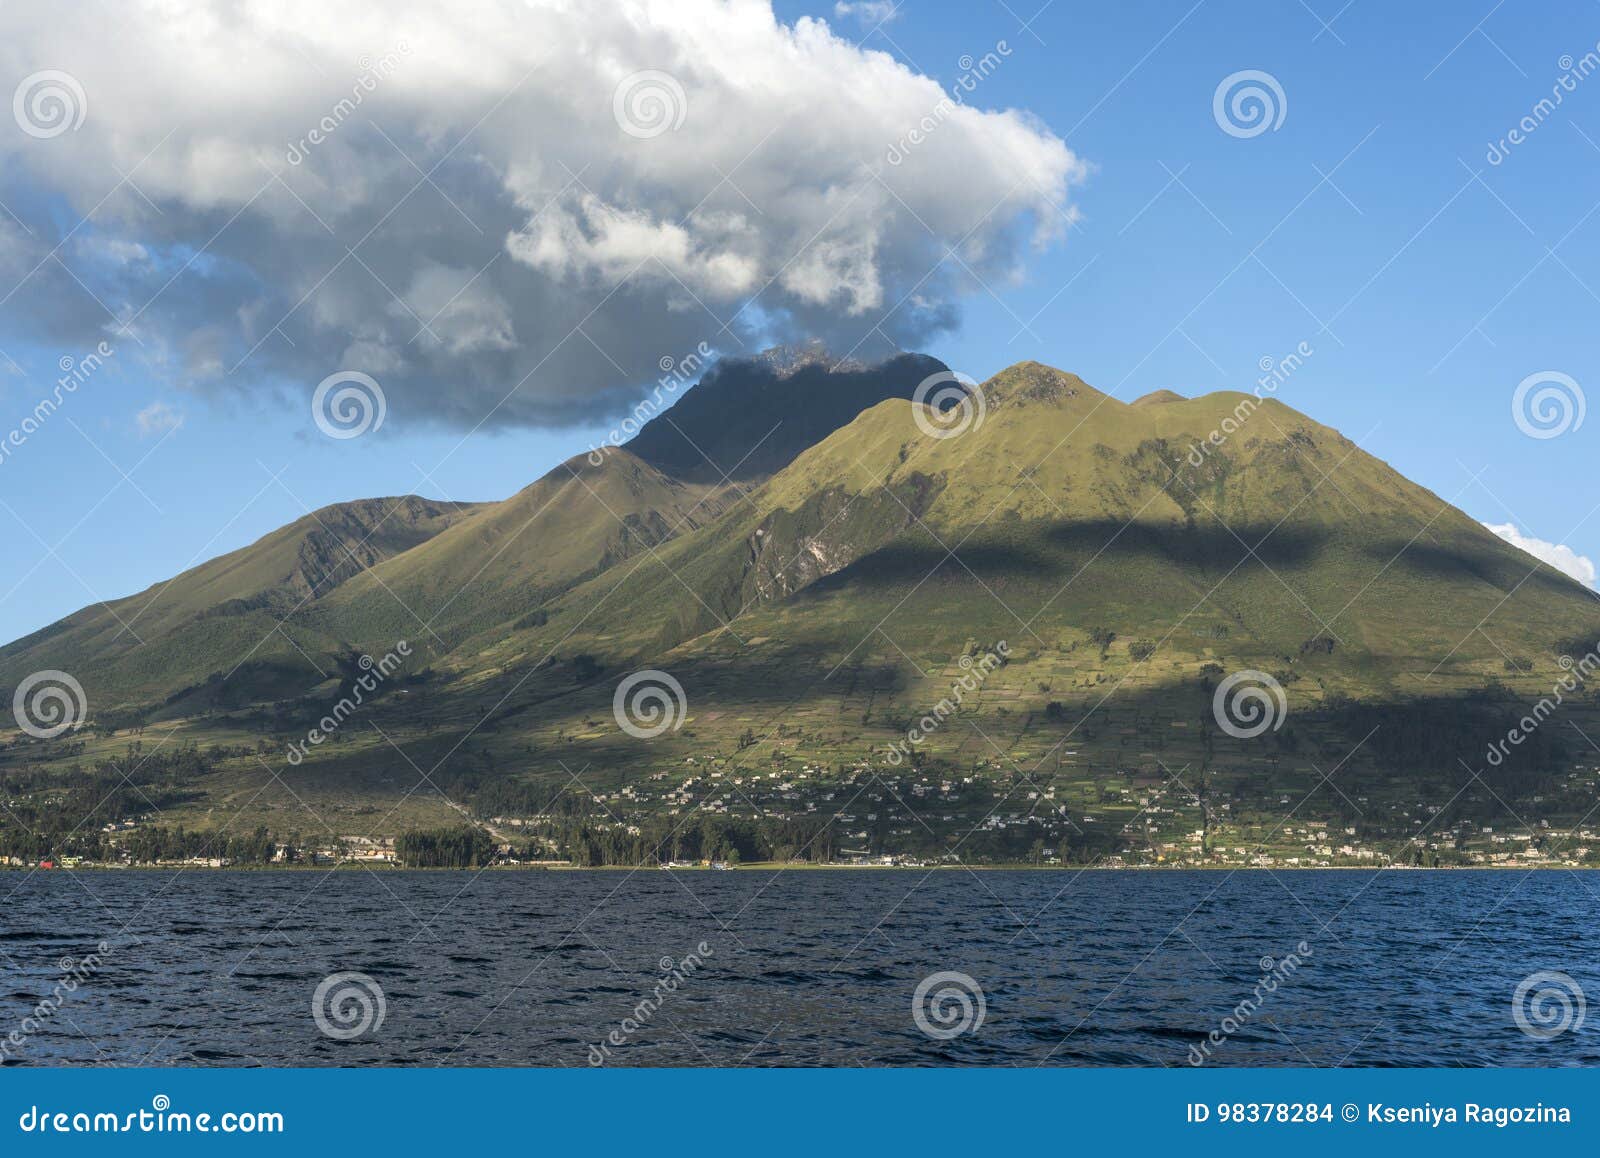 imbabura volcano under san pablo lake, ecuador